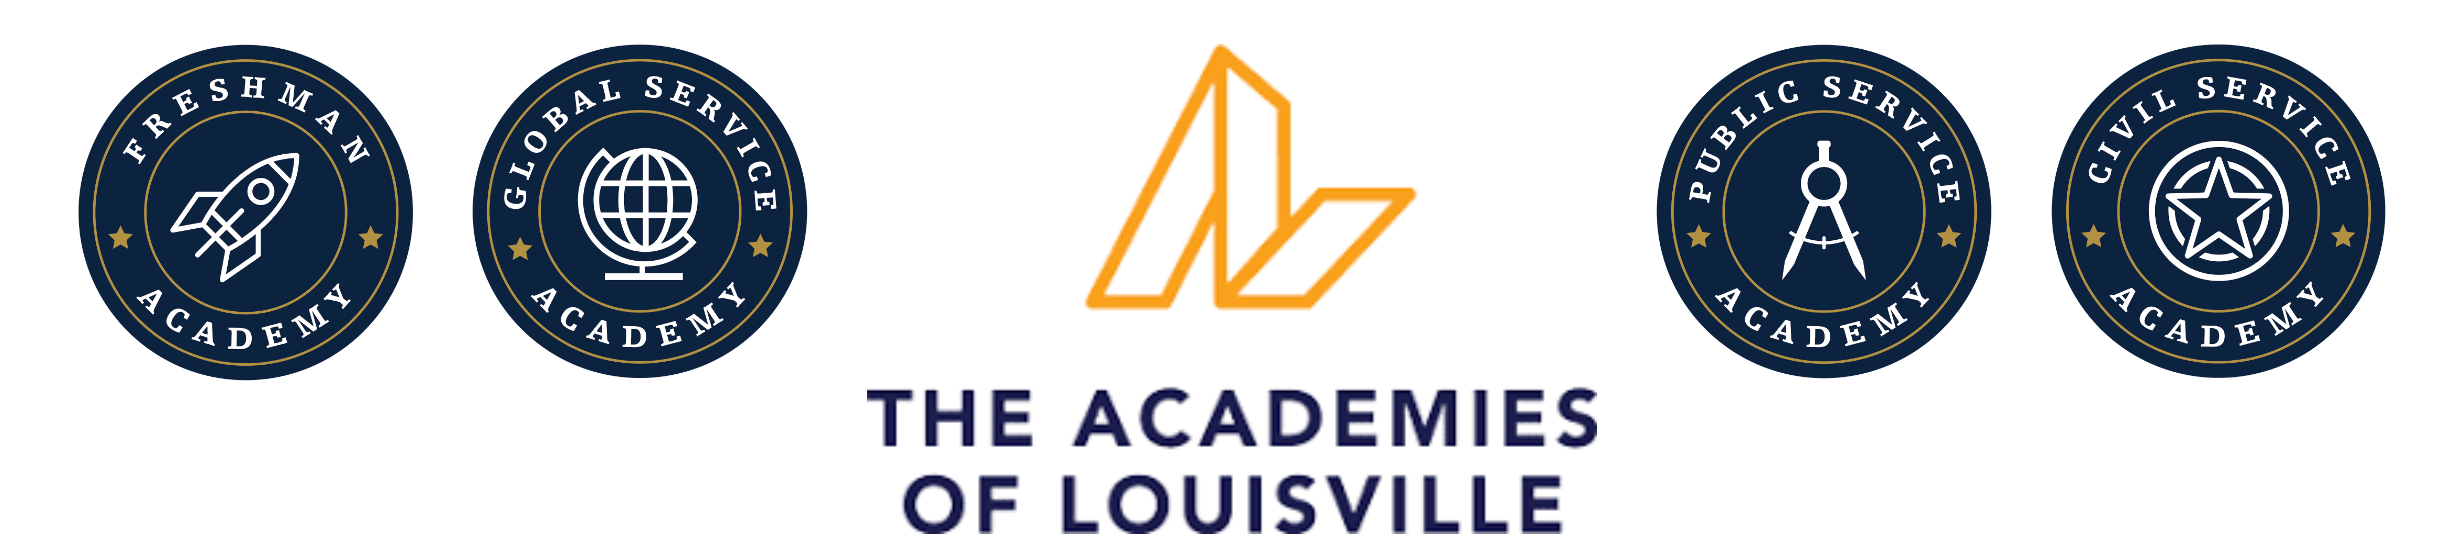 the Academies of Louisville Header